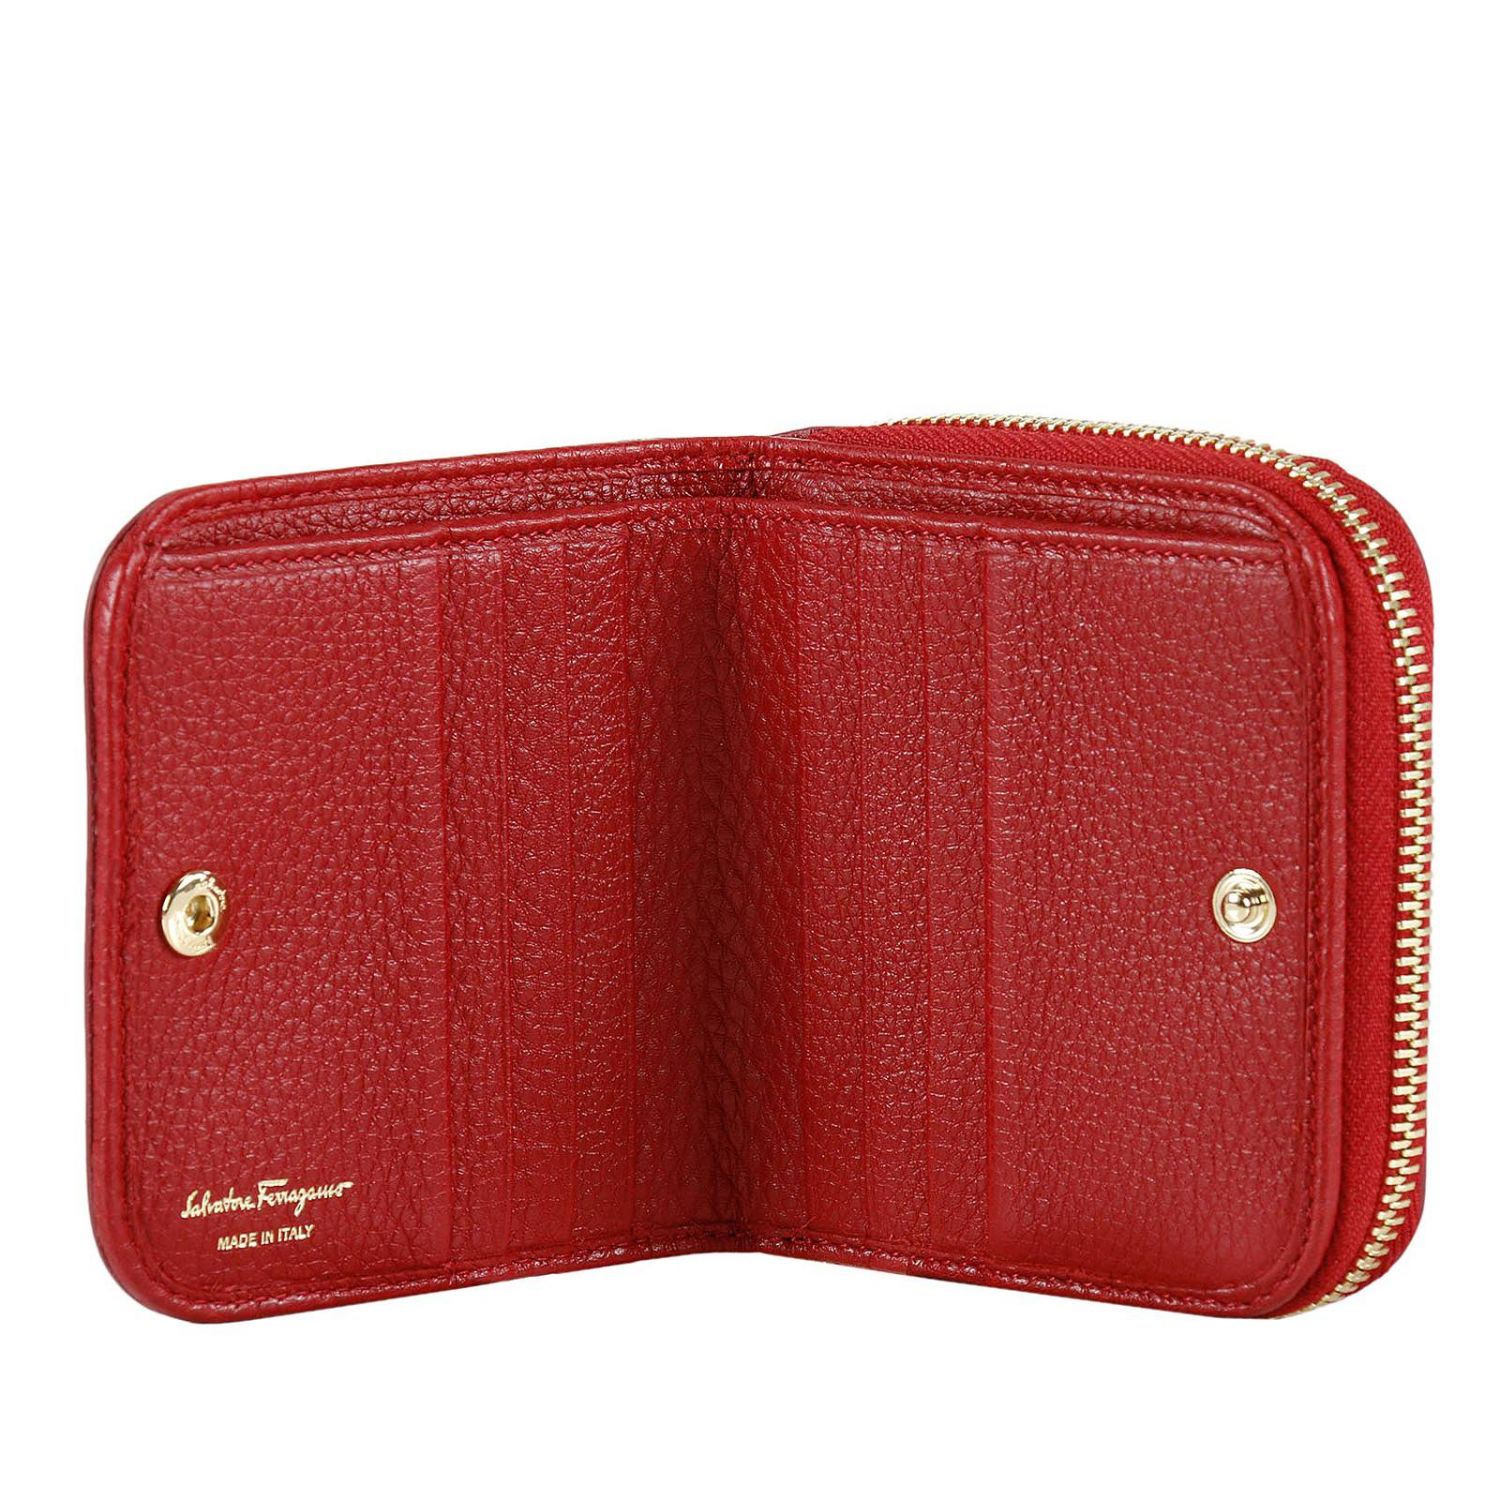 Salvatore Ferragamo Outlet: Wallet women - Red | Wallet Salvatore